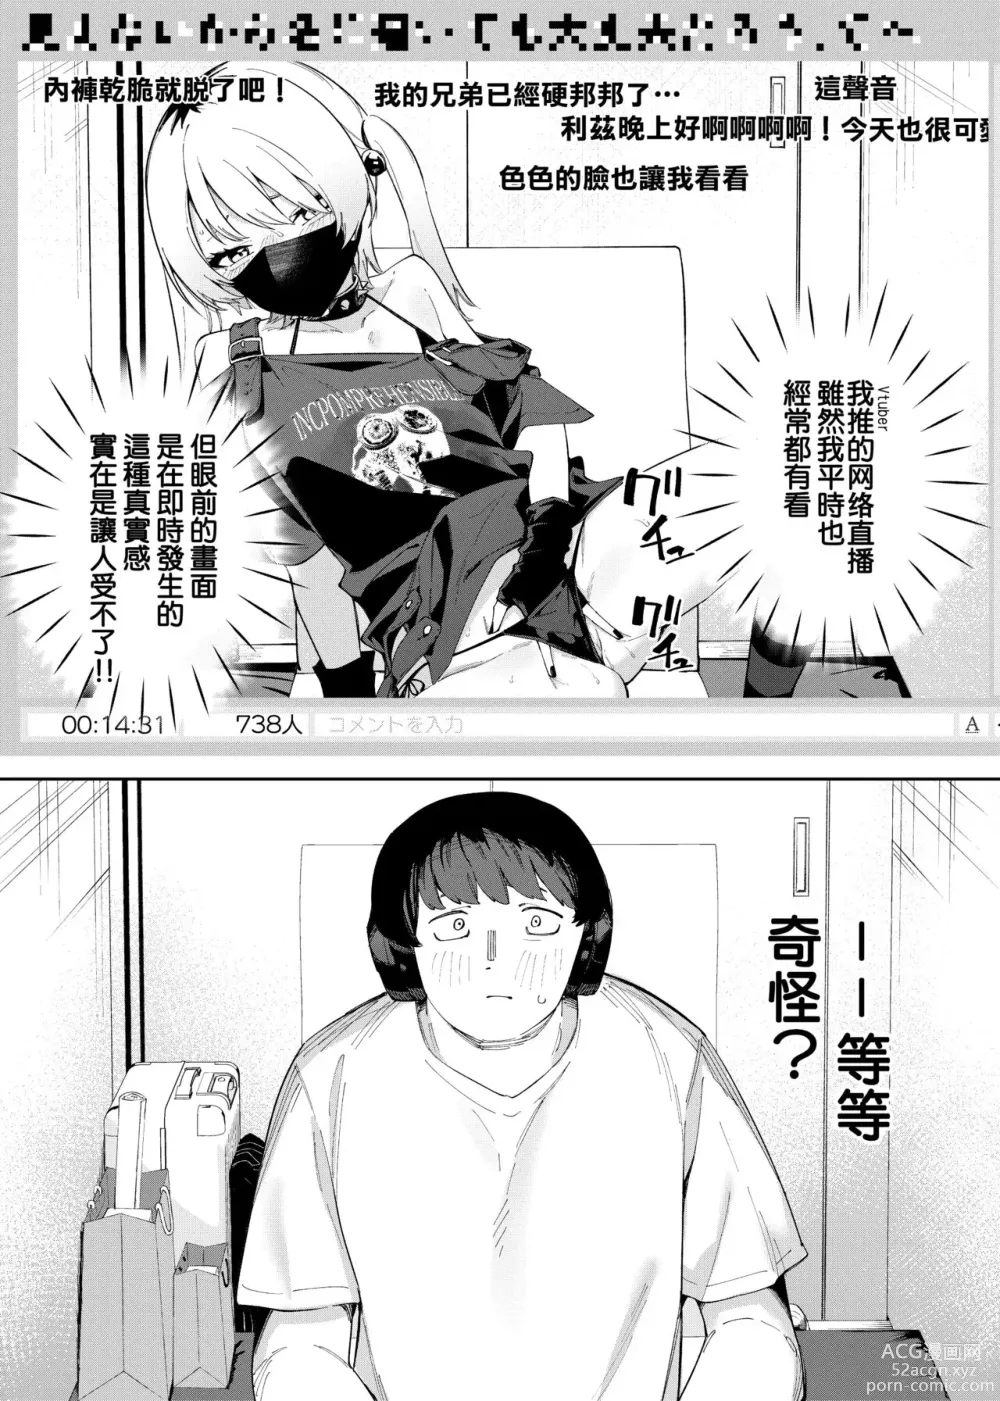 Page 8 of manga rinzin ha yuumei haisin sya4 nin me